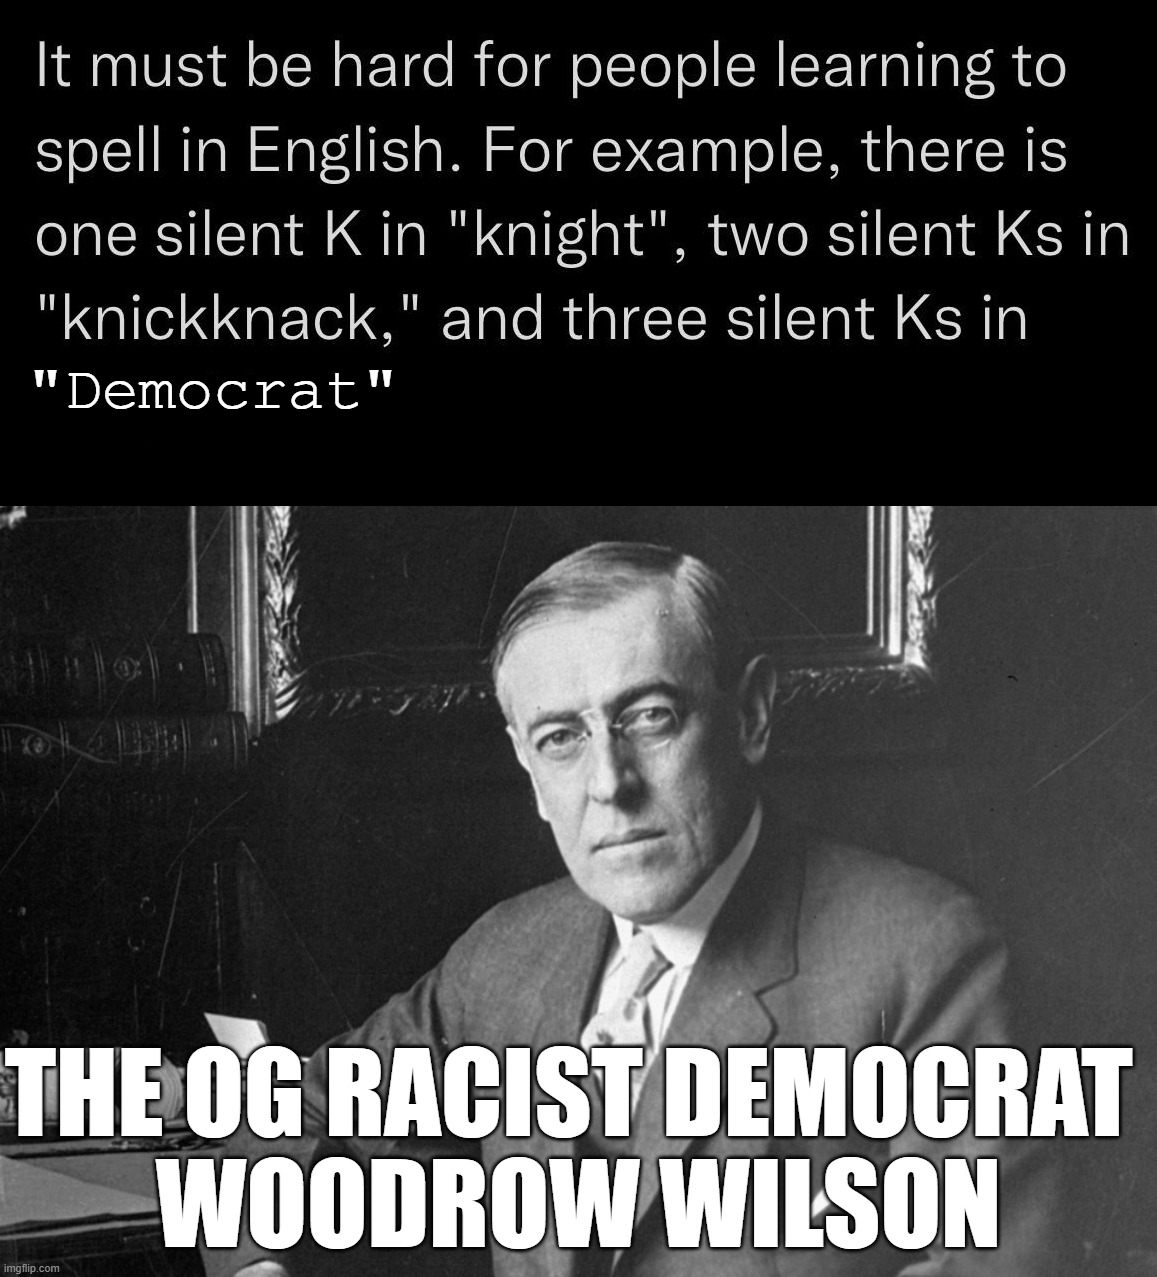  "Democrat"; THE OG RACIST DEMOCRAT 
WOODROW WILSON | image tagged in woodrow wilson,political meme,democrats | made w/ Imgflip meme maker